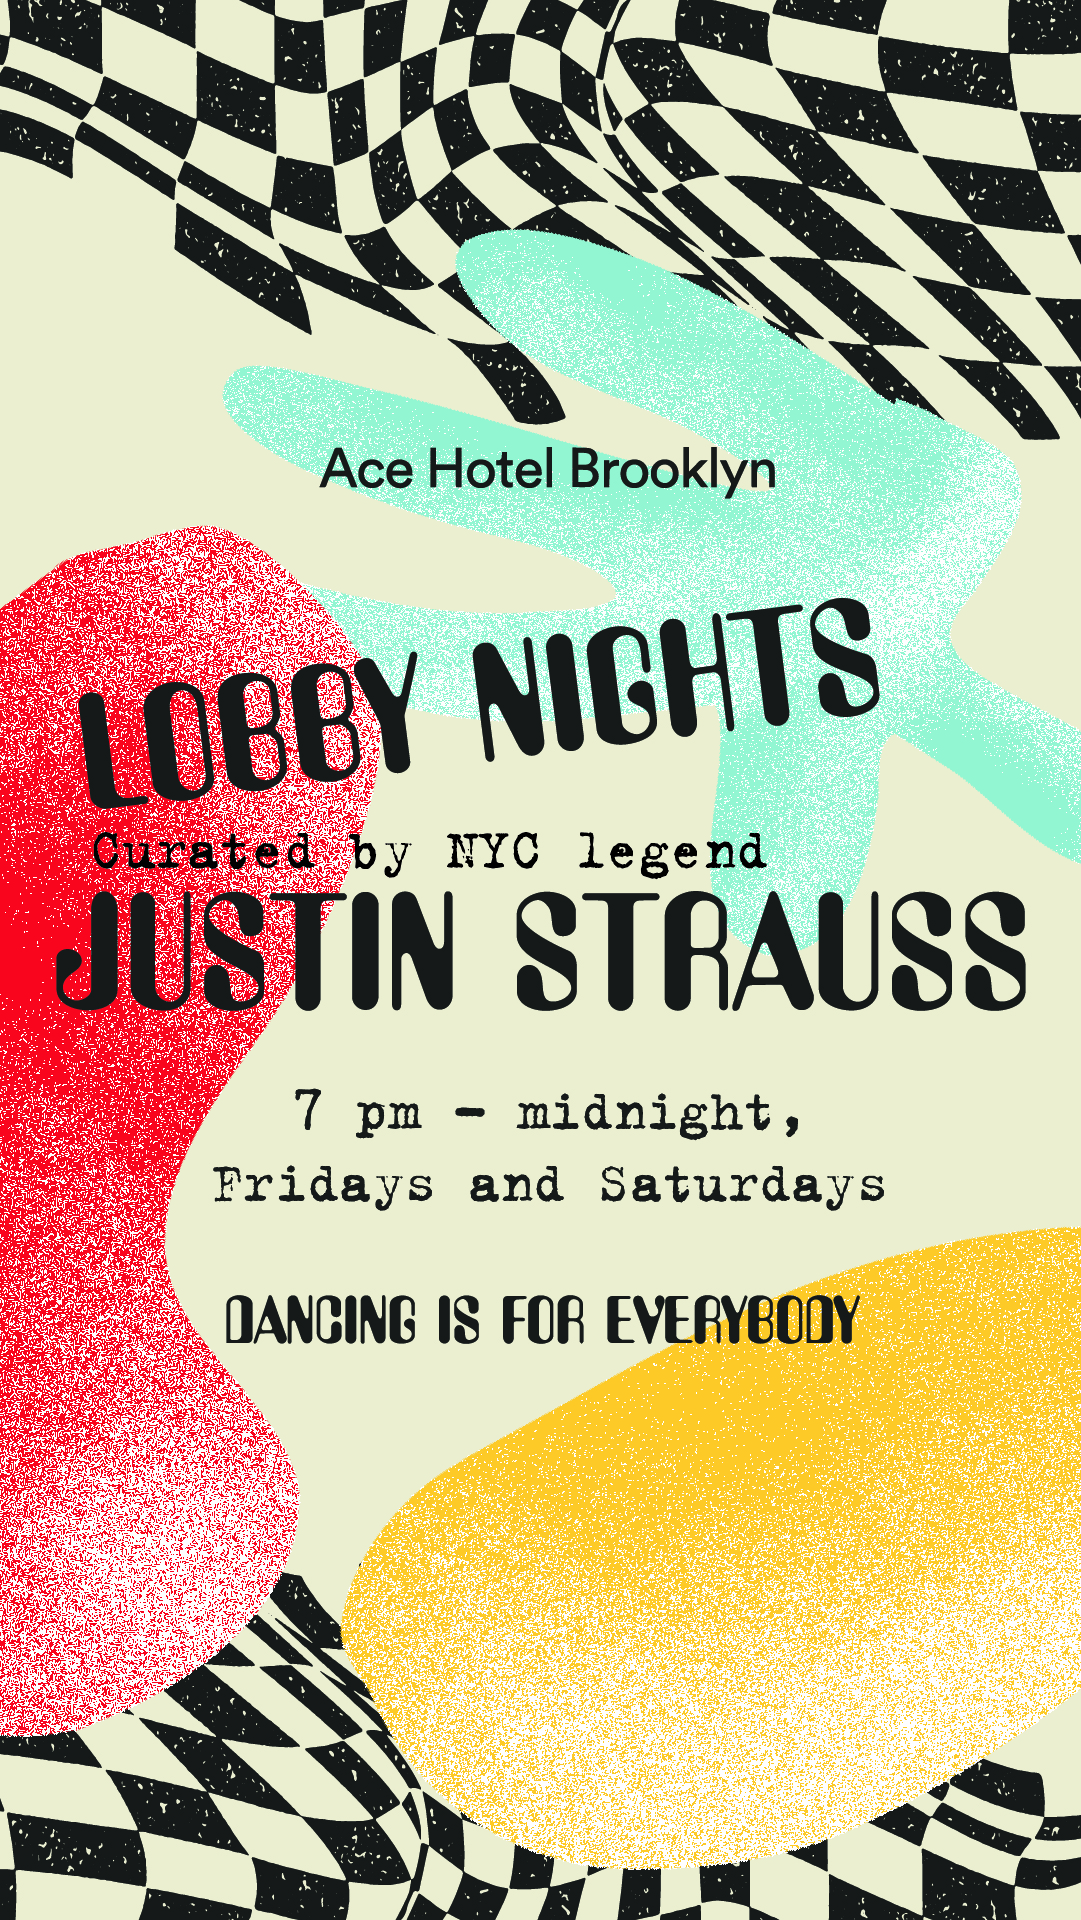 Lobby Nights event flyer